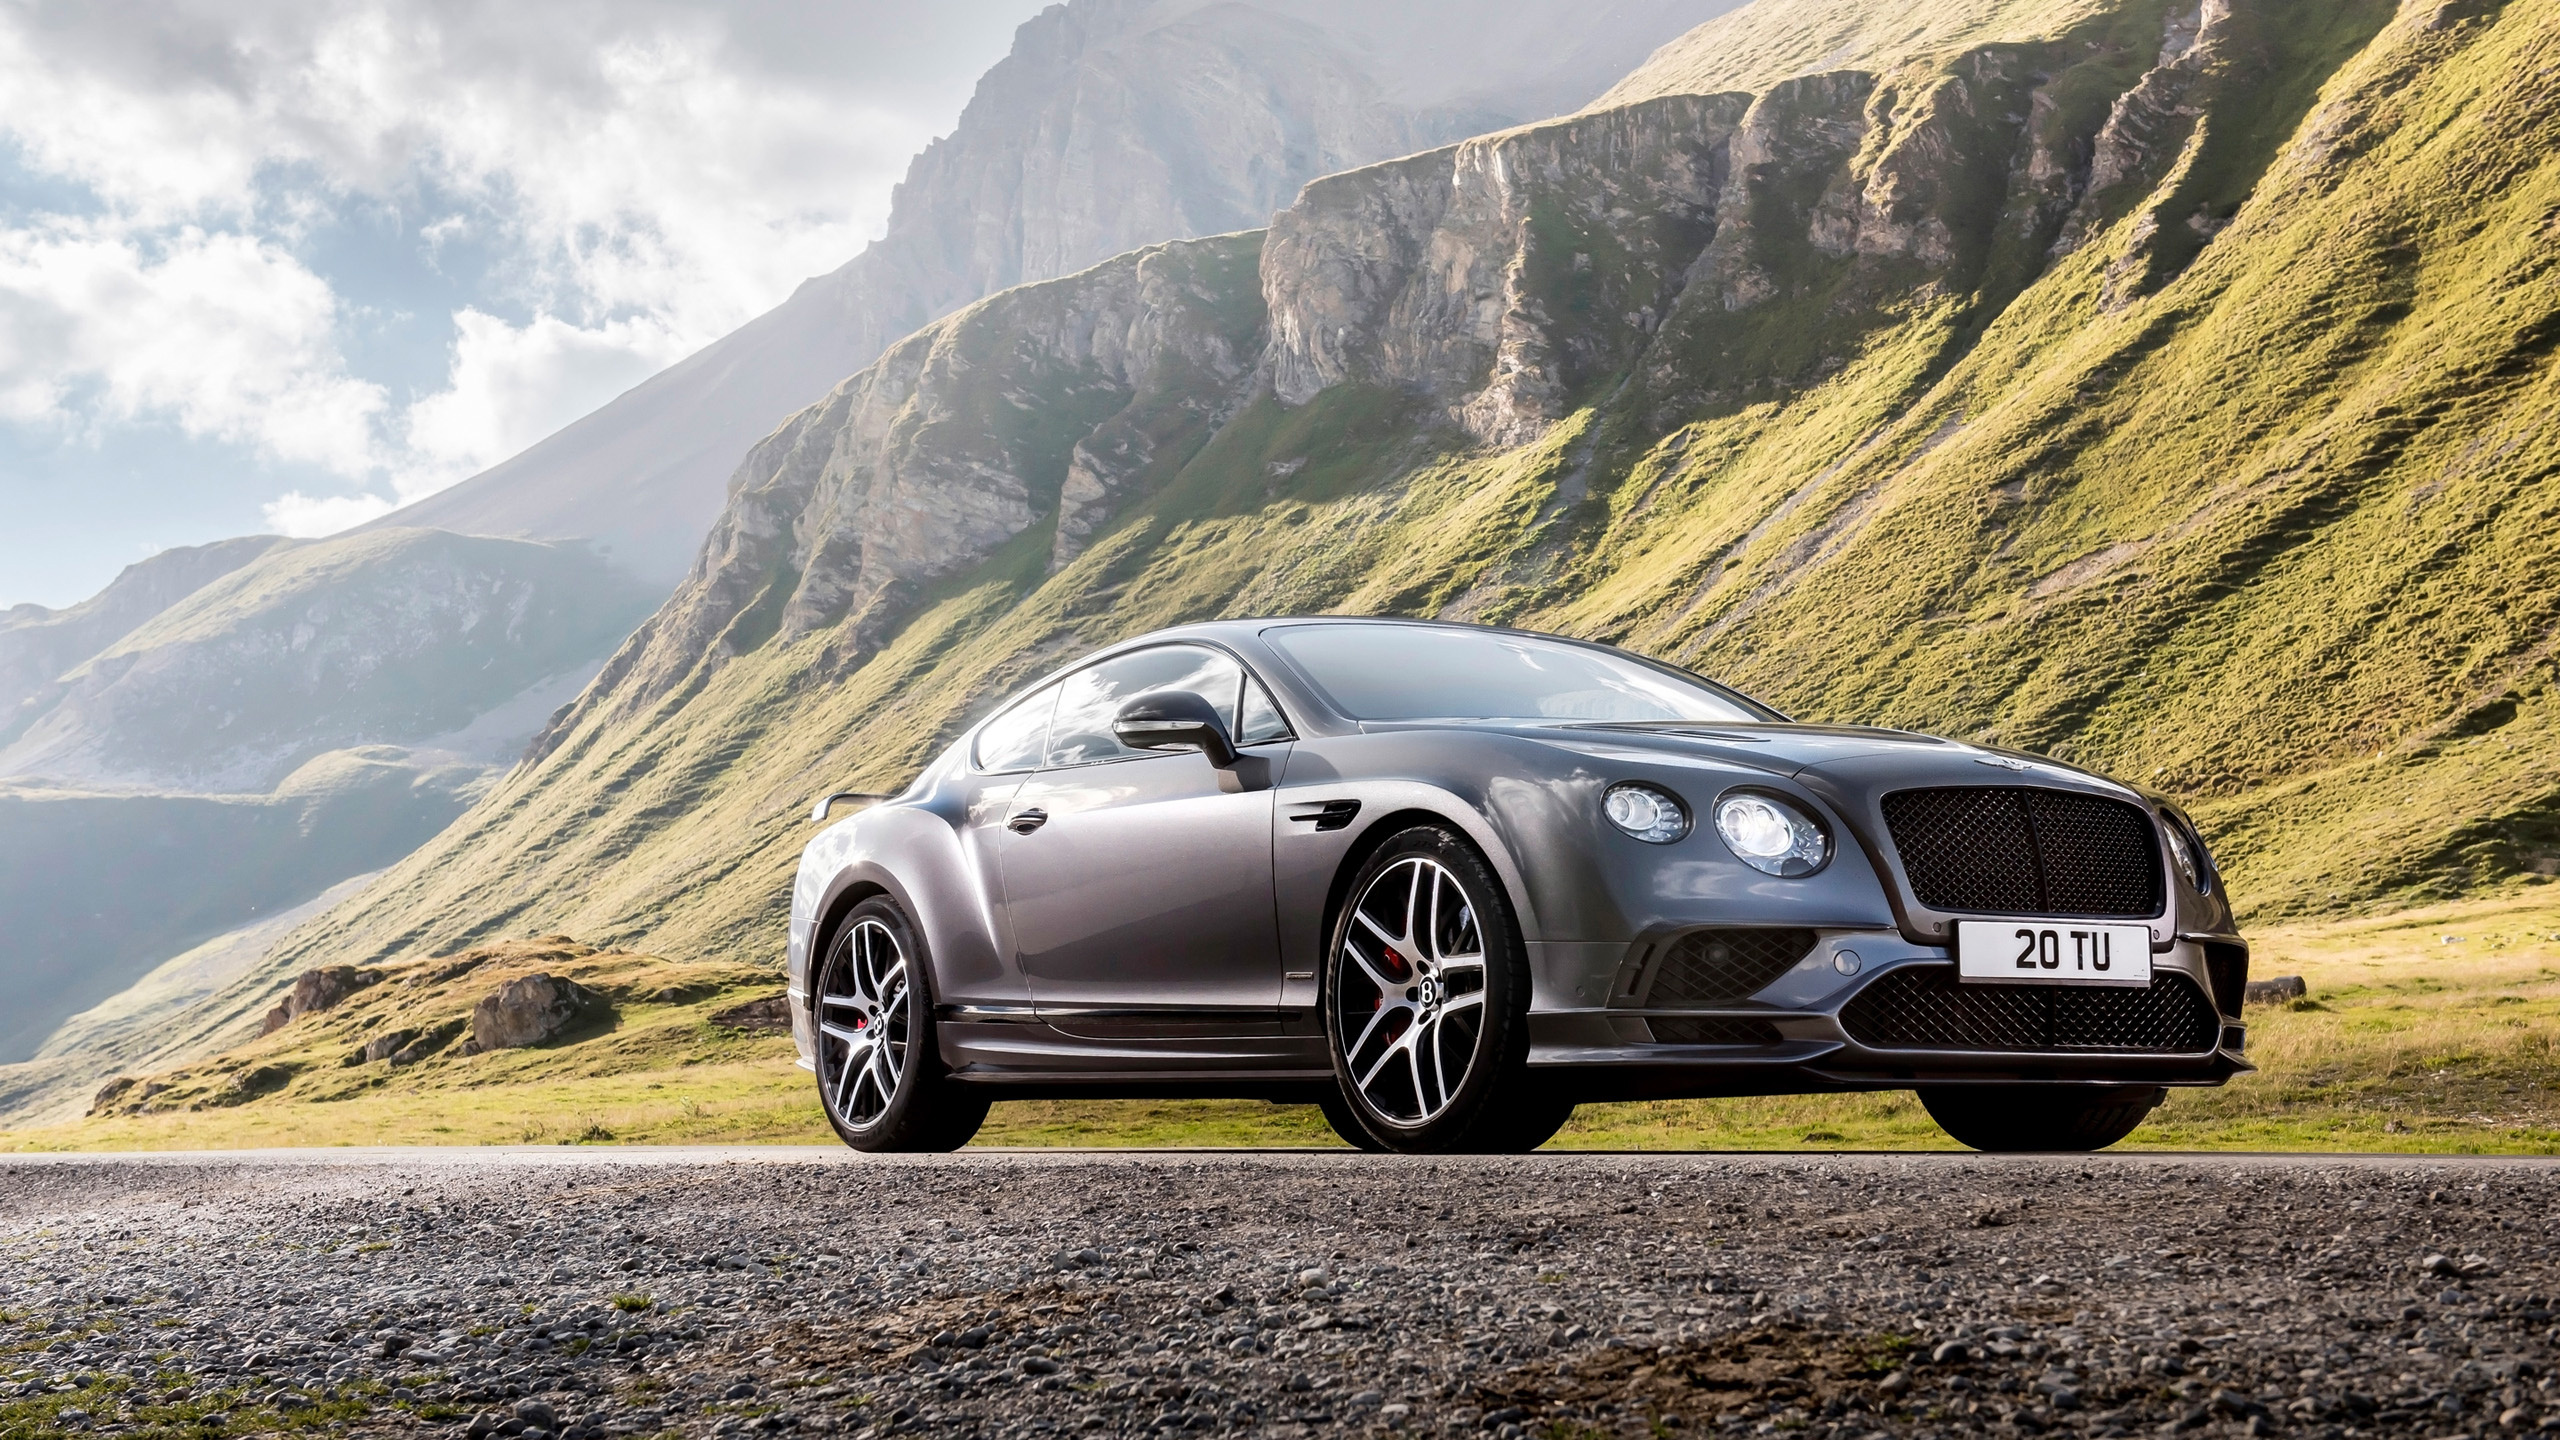 Bentley Continental, Supersports edition, Exquisite car wallpapers, Stunning design, 2560x1440 HD Desktop